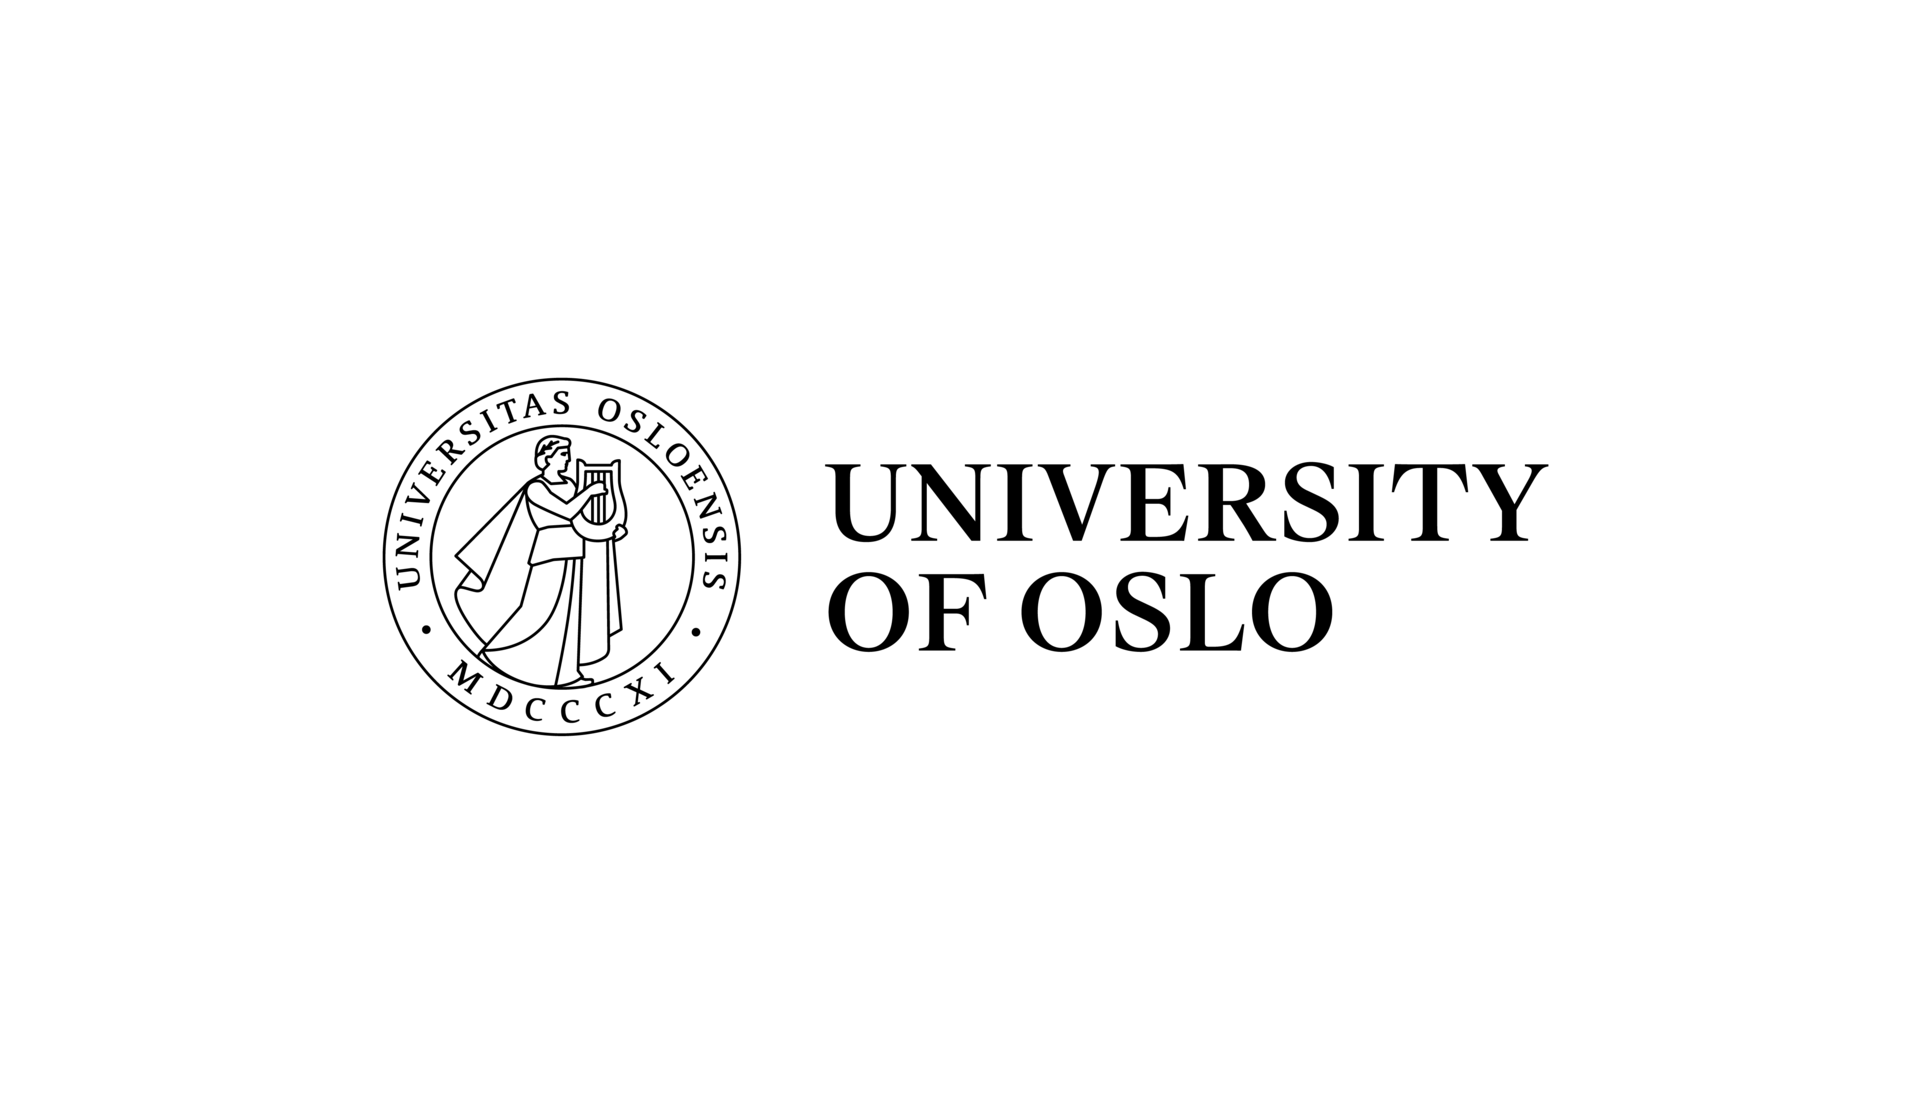 logo of the University of Oslo with Apollon symbol